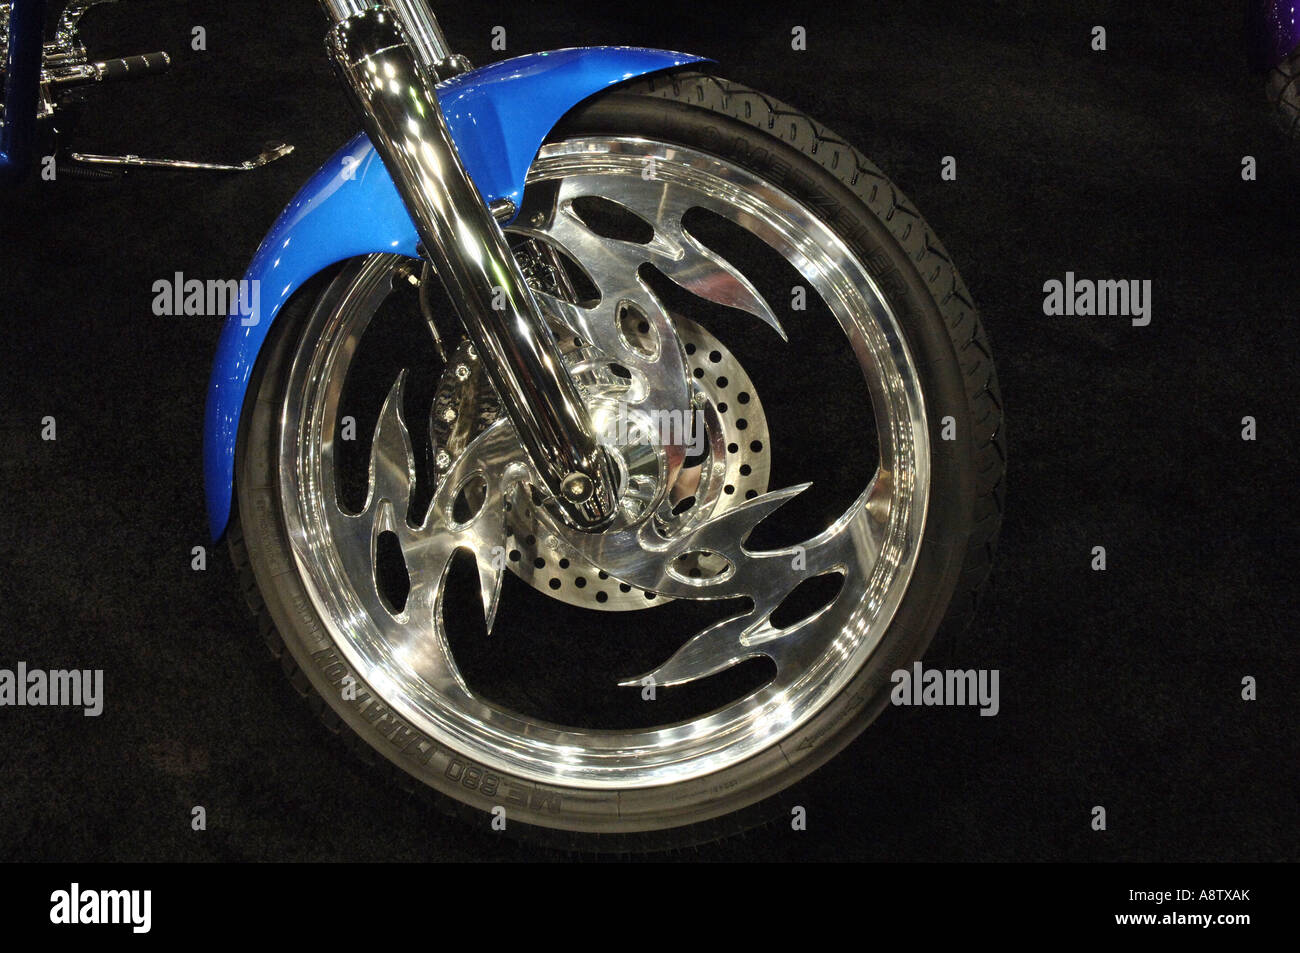 Motorcycle Show Custom motorcycle wheel. Stock Photo